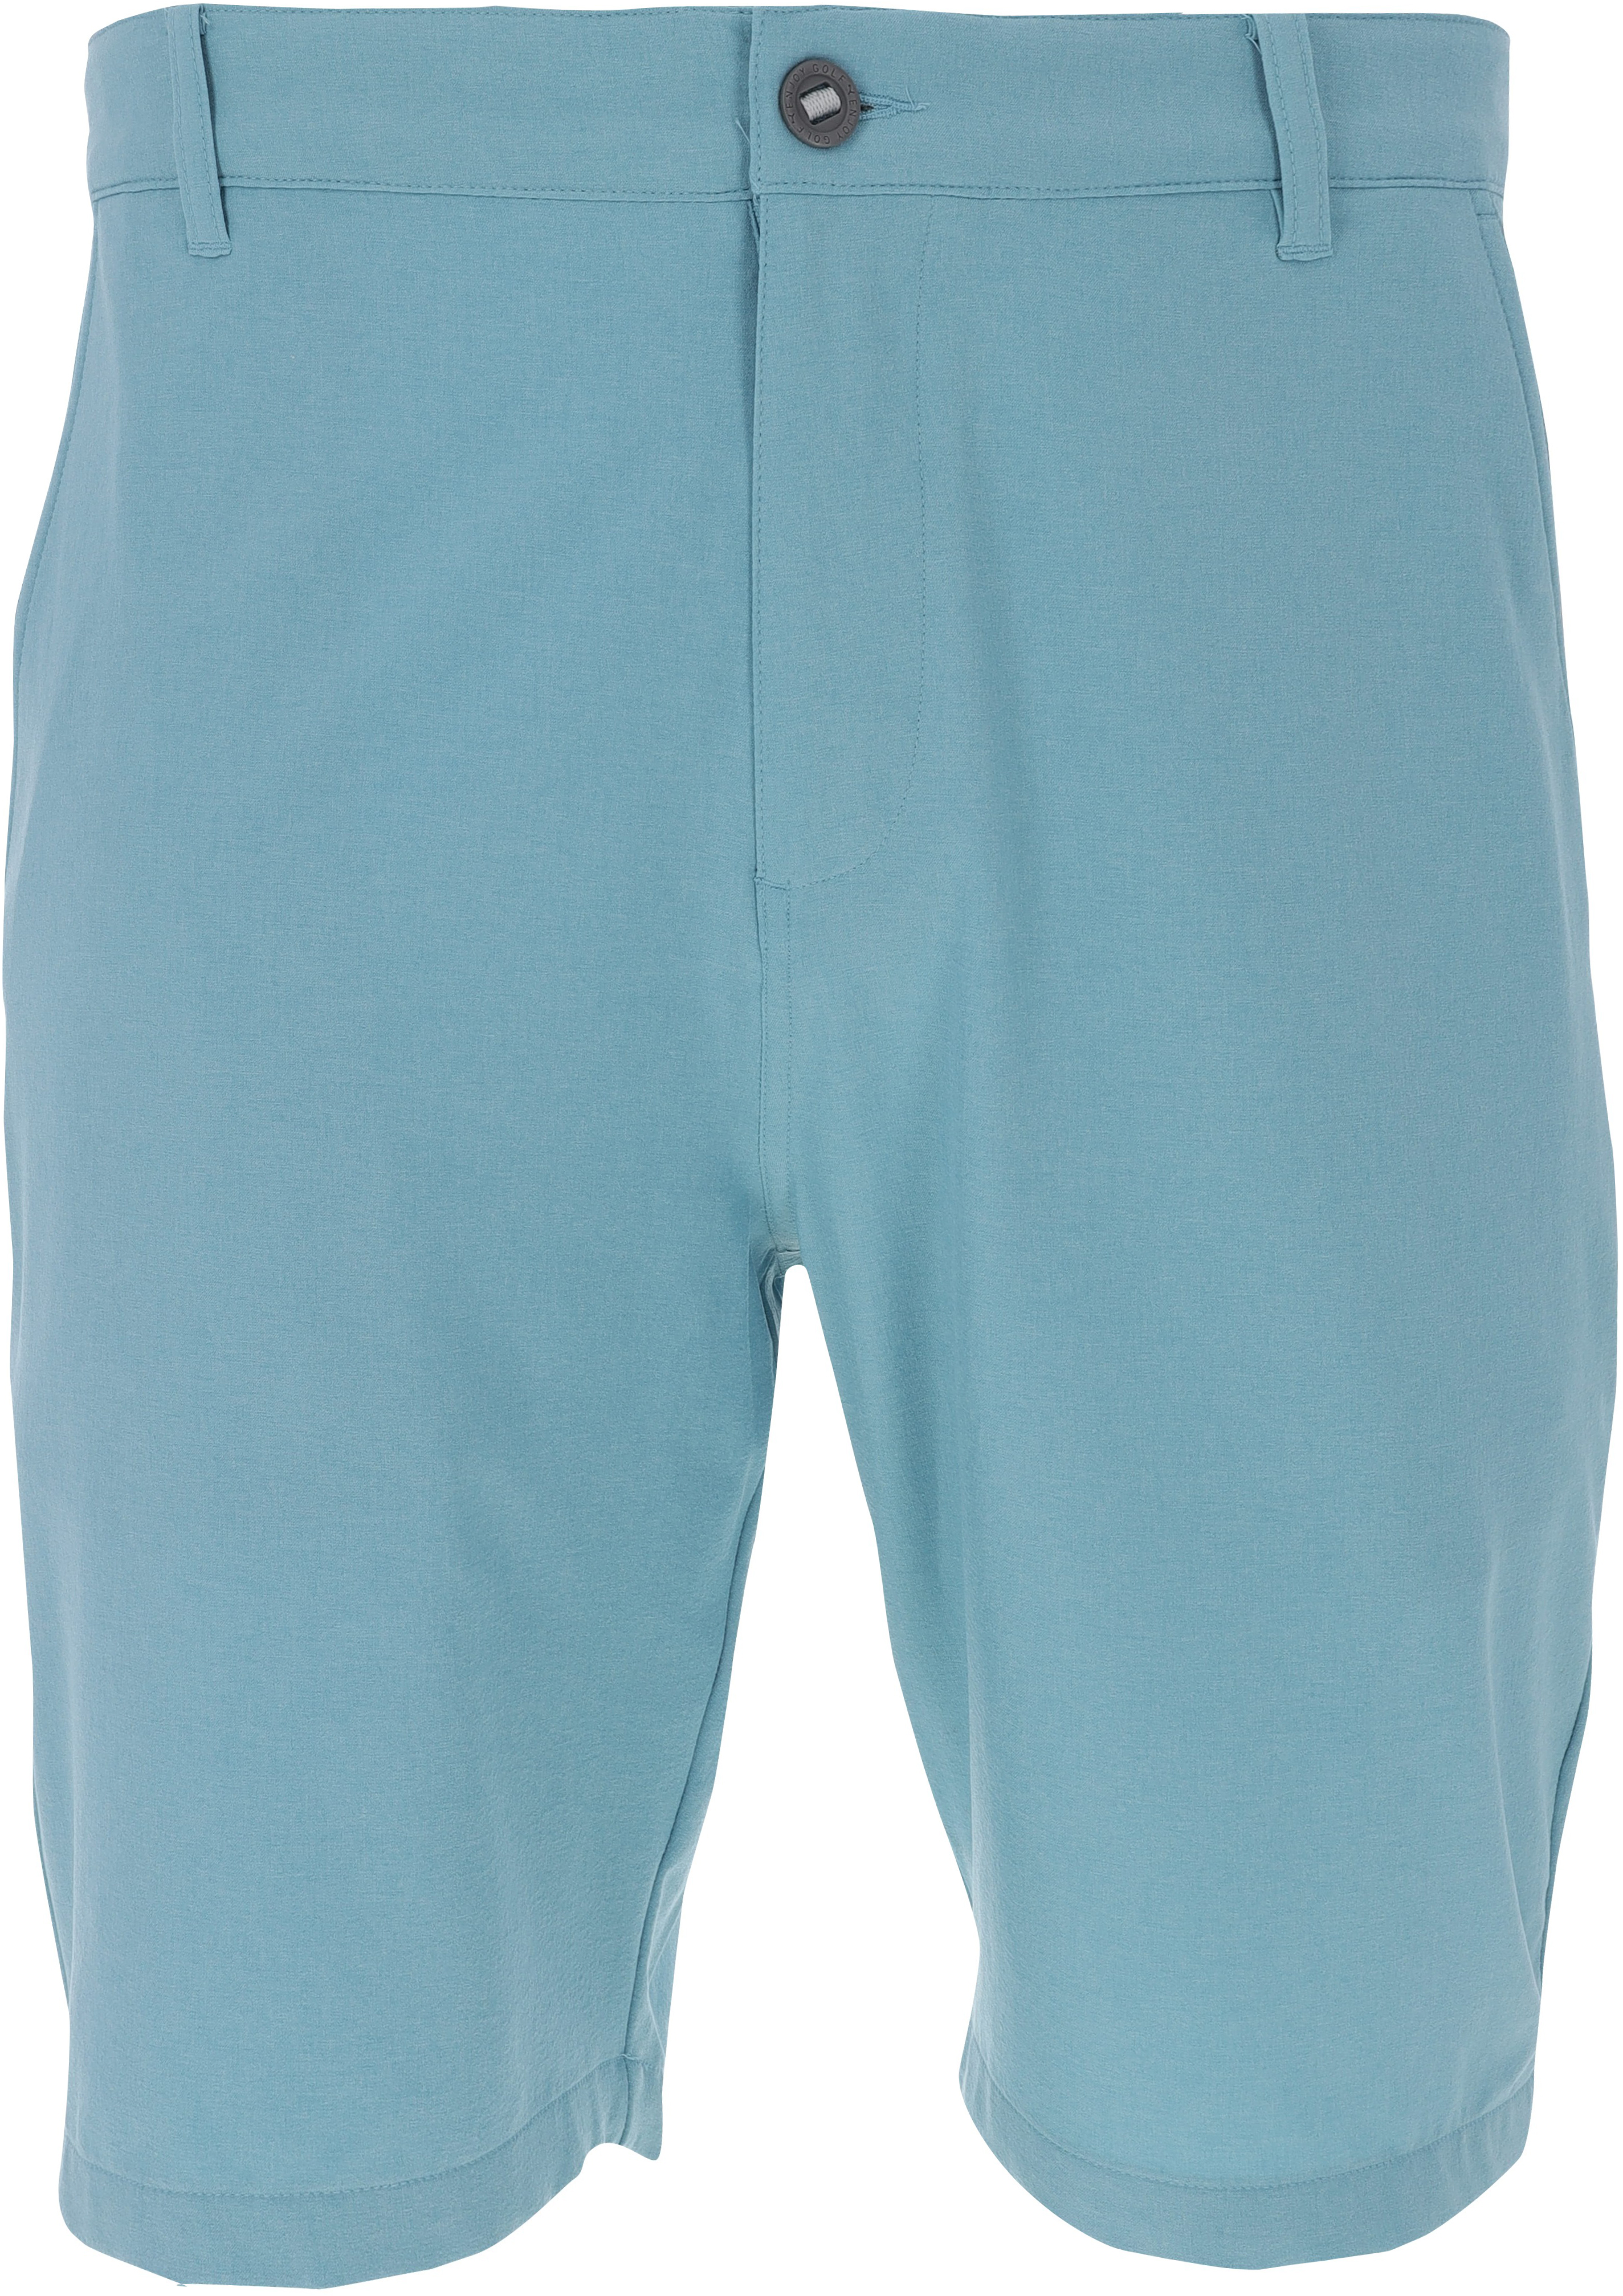 Puma 101 North Flat Front Shorts Men Choose Size & Color - image 1 of 5